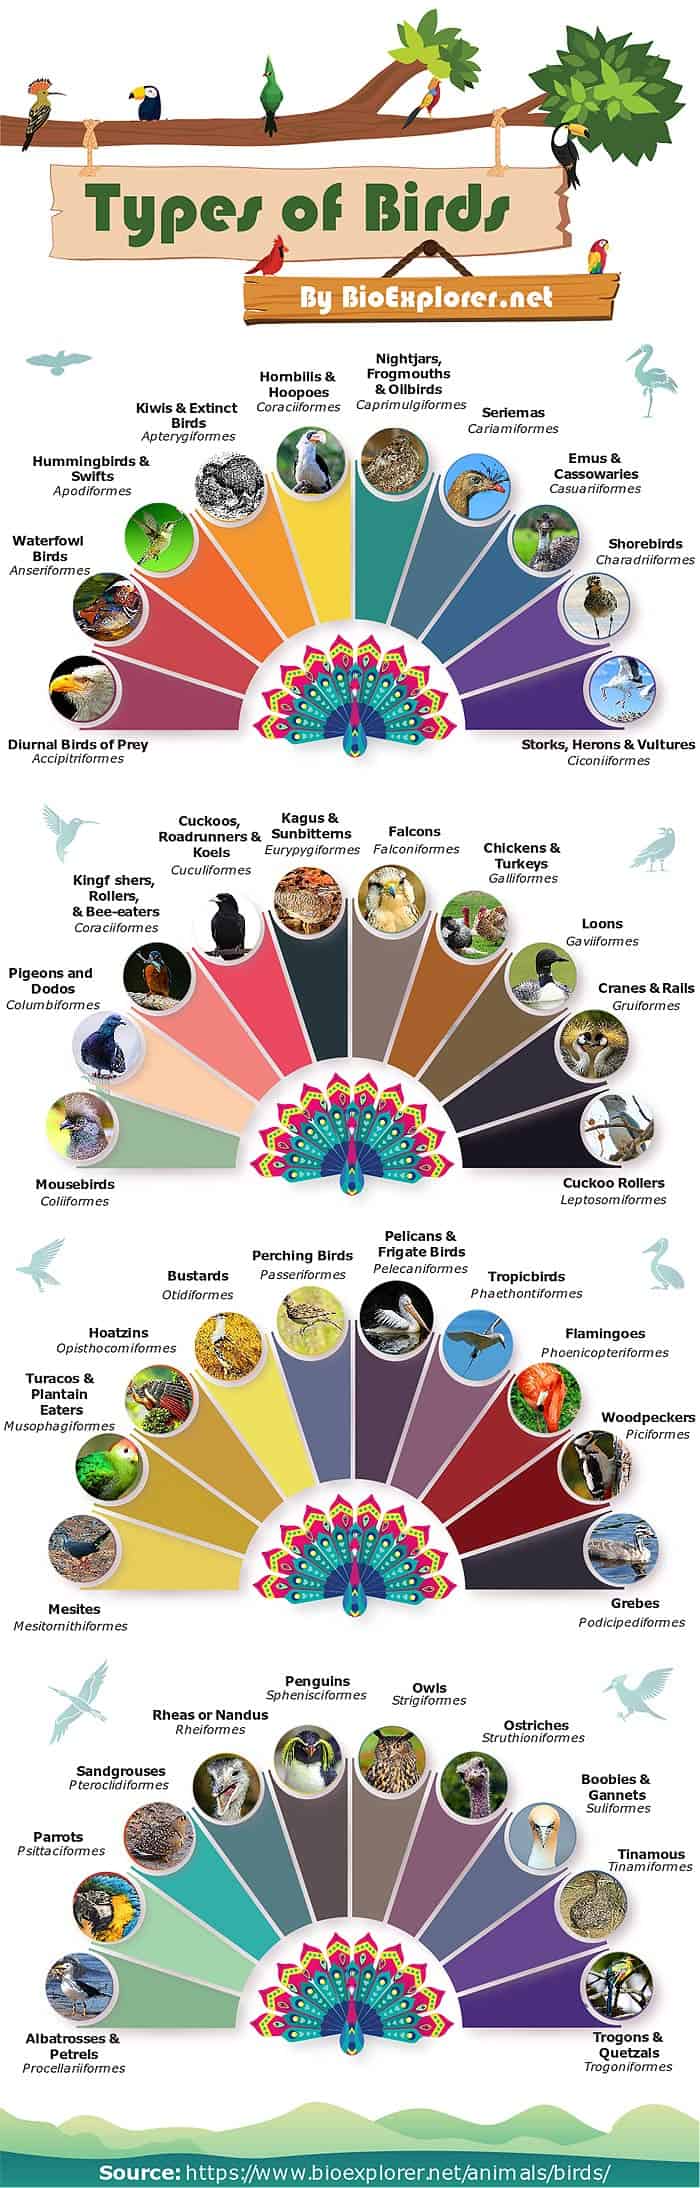 Characteristics of Birds of Prey